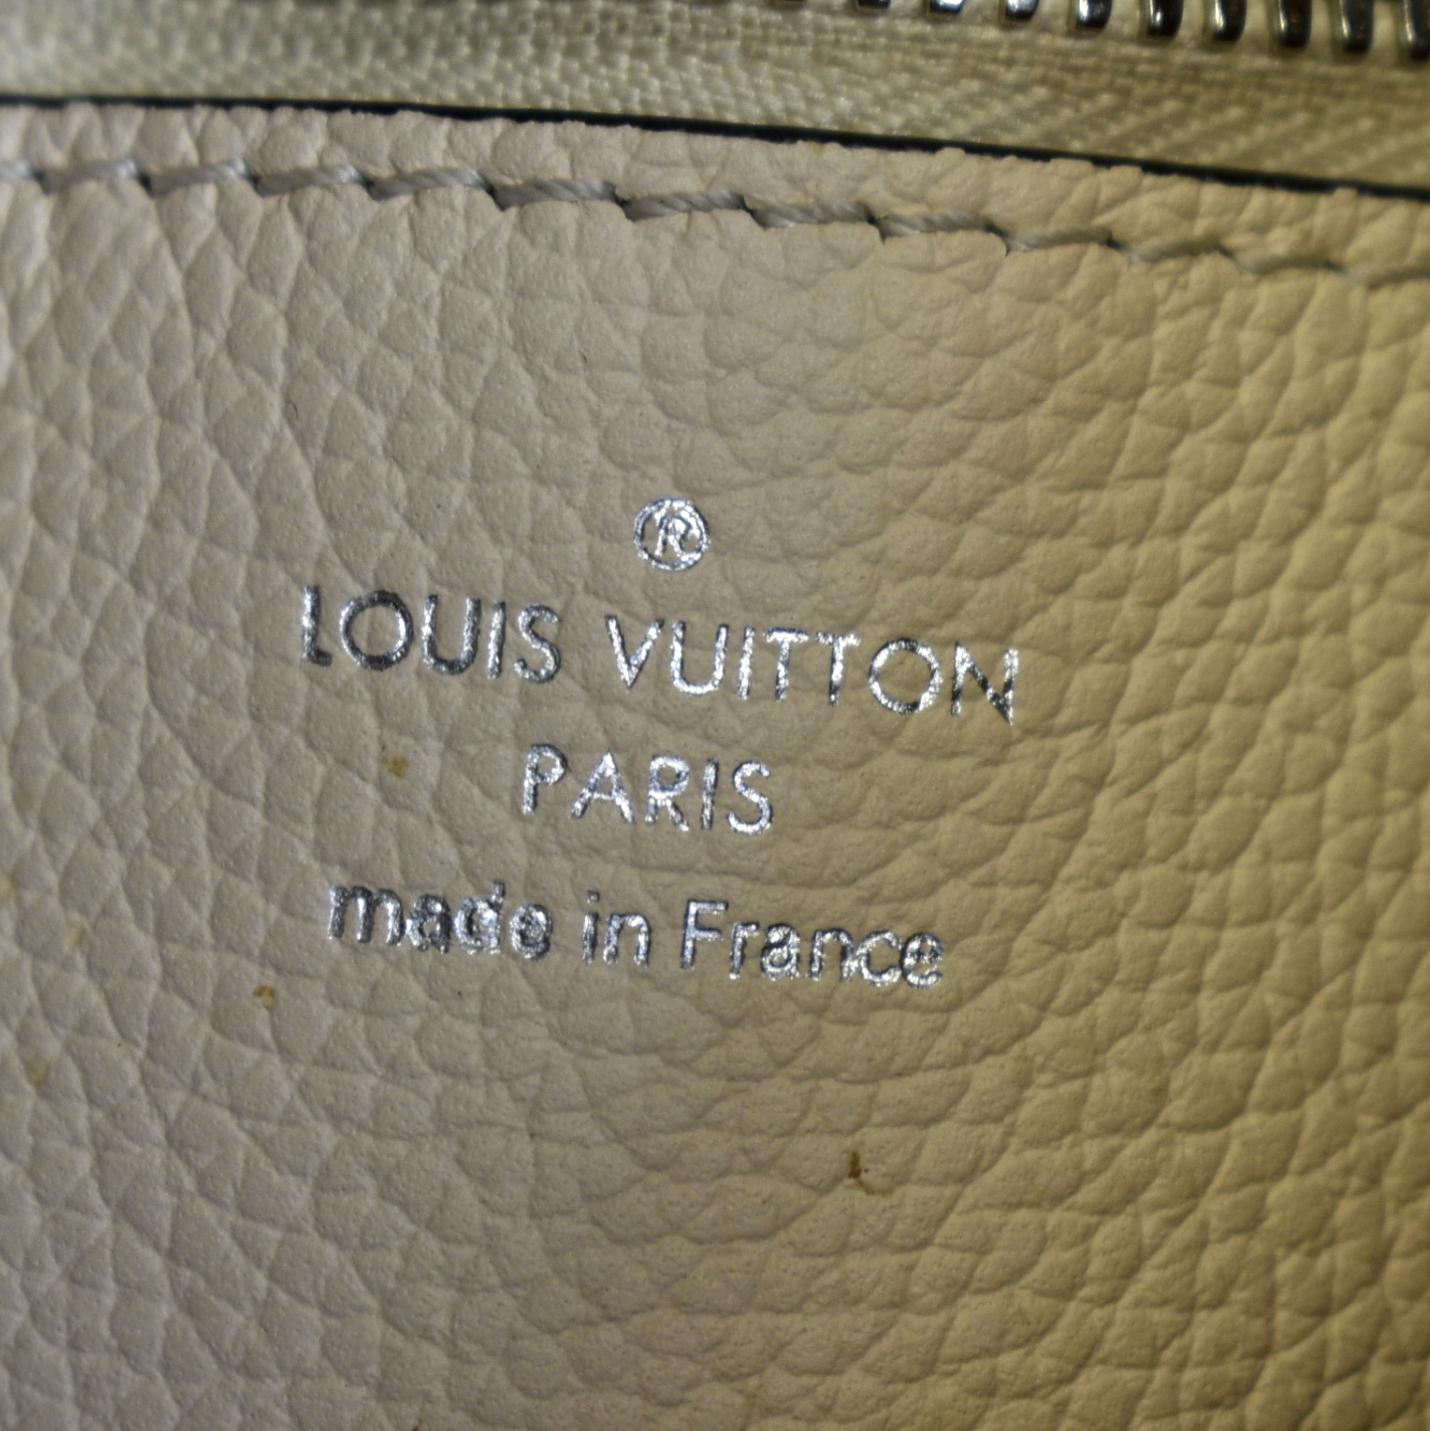 louis vuitton paris made in france handbag